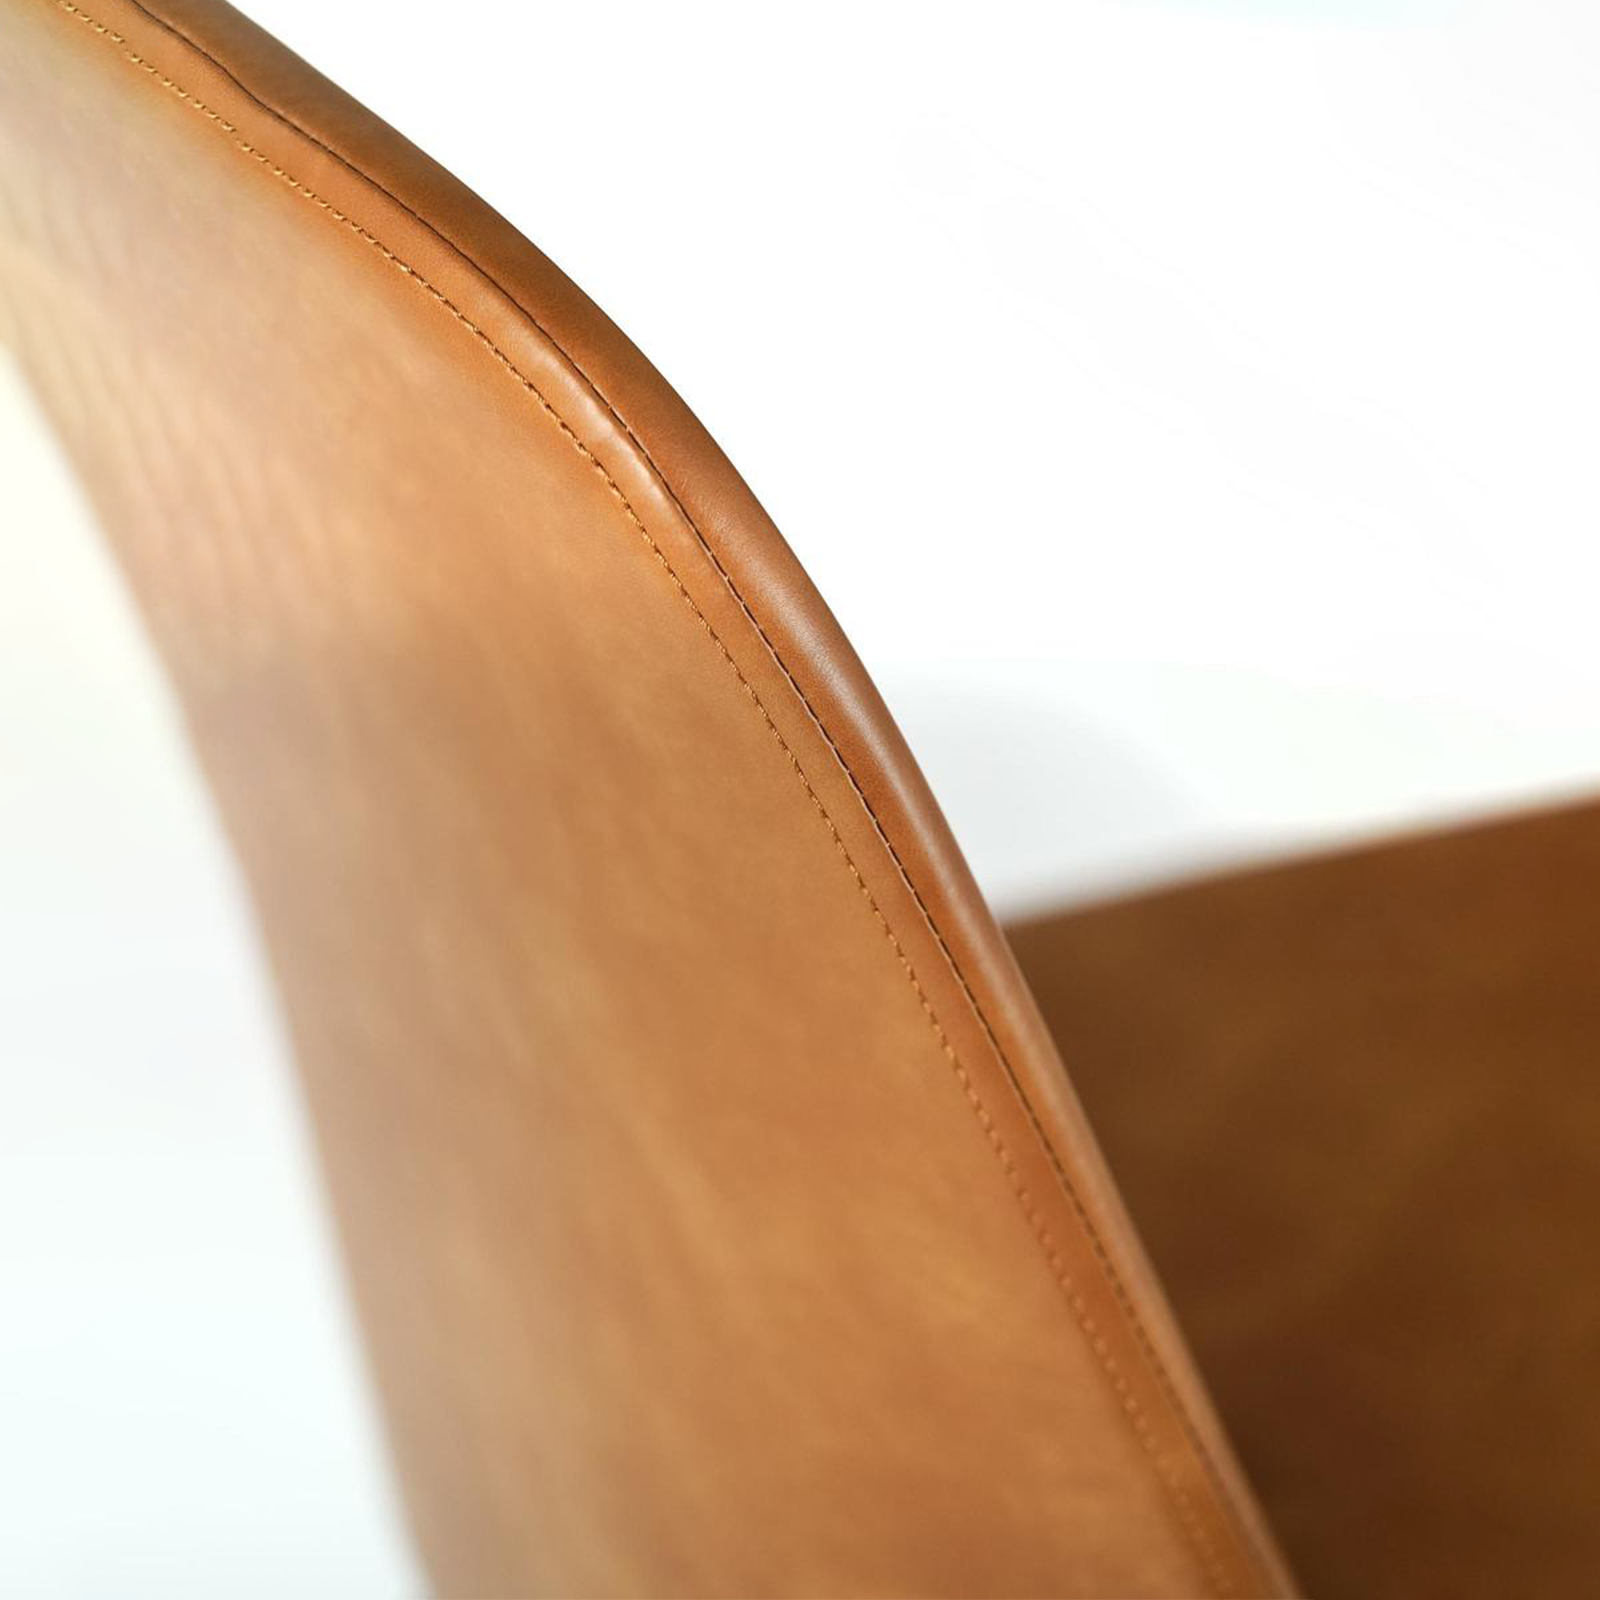 Set di sedie moderne da pranzo "Damasco" imbottite in similpelle soft touch